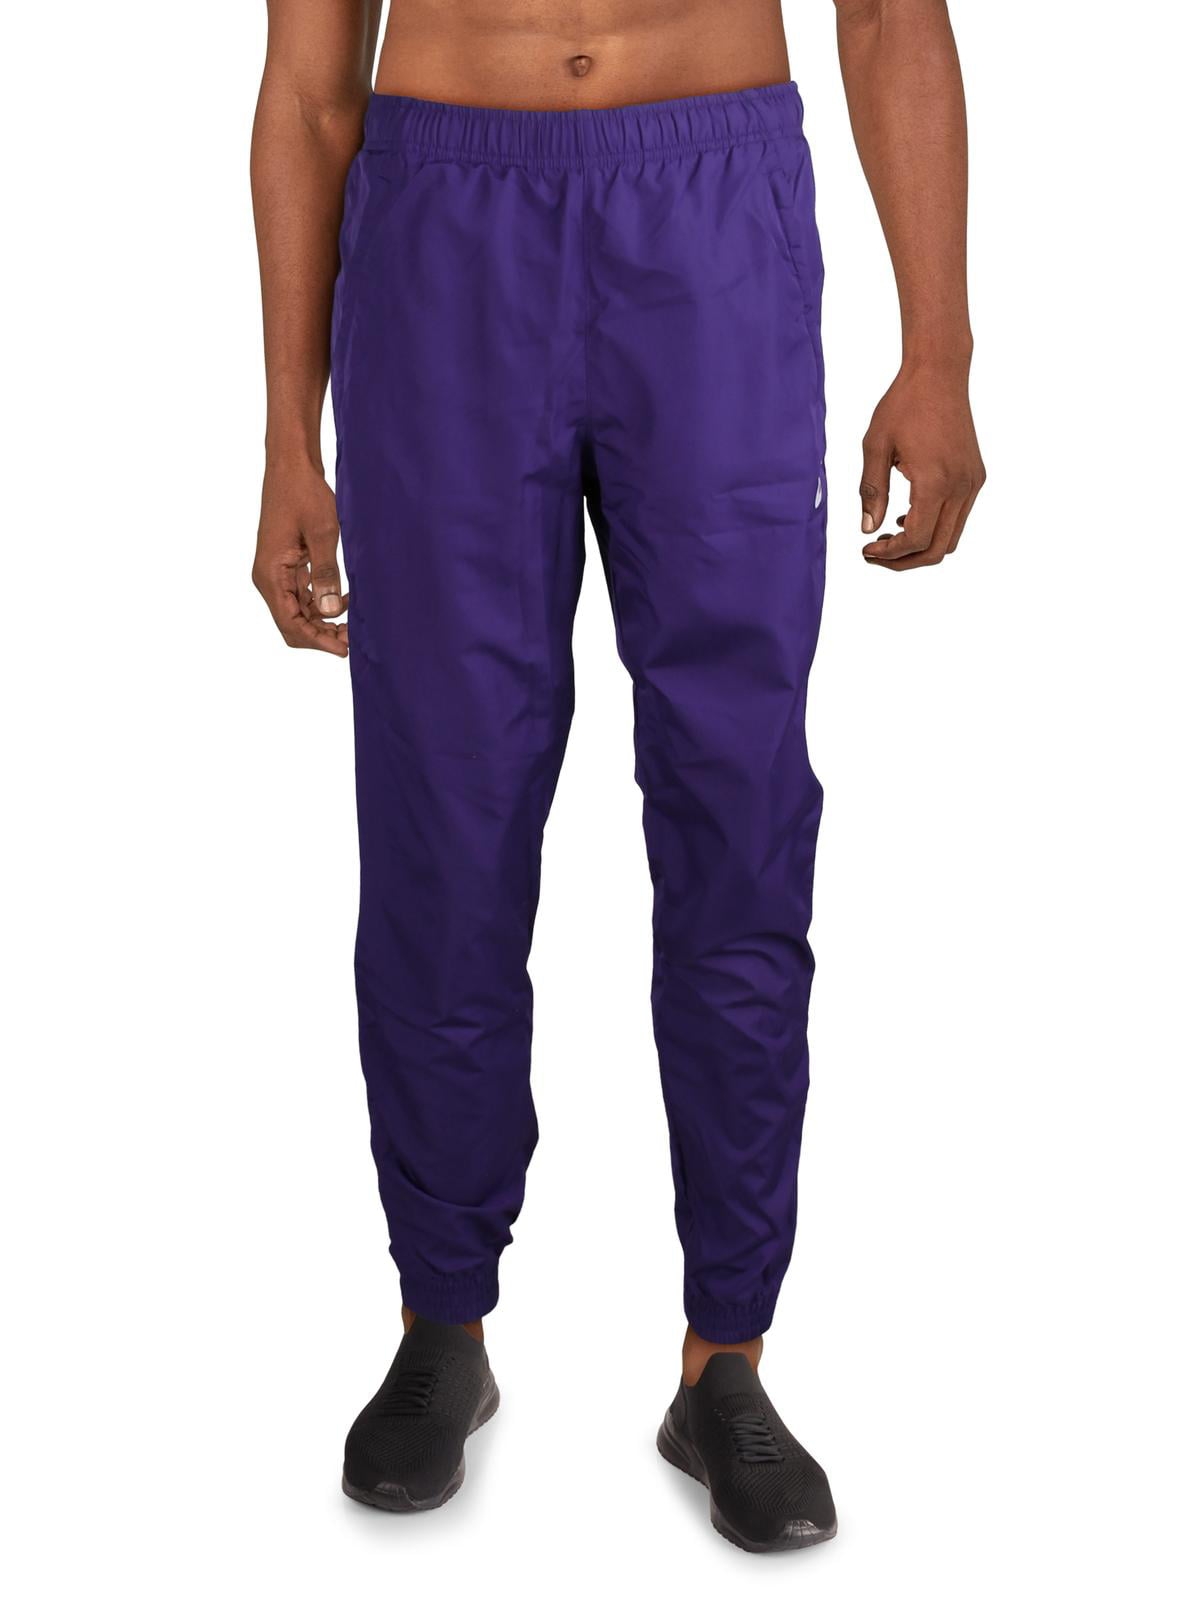 ASICS Men's Upsurge Pant, Color Options - Walmart.com